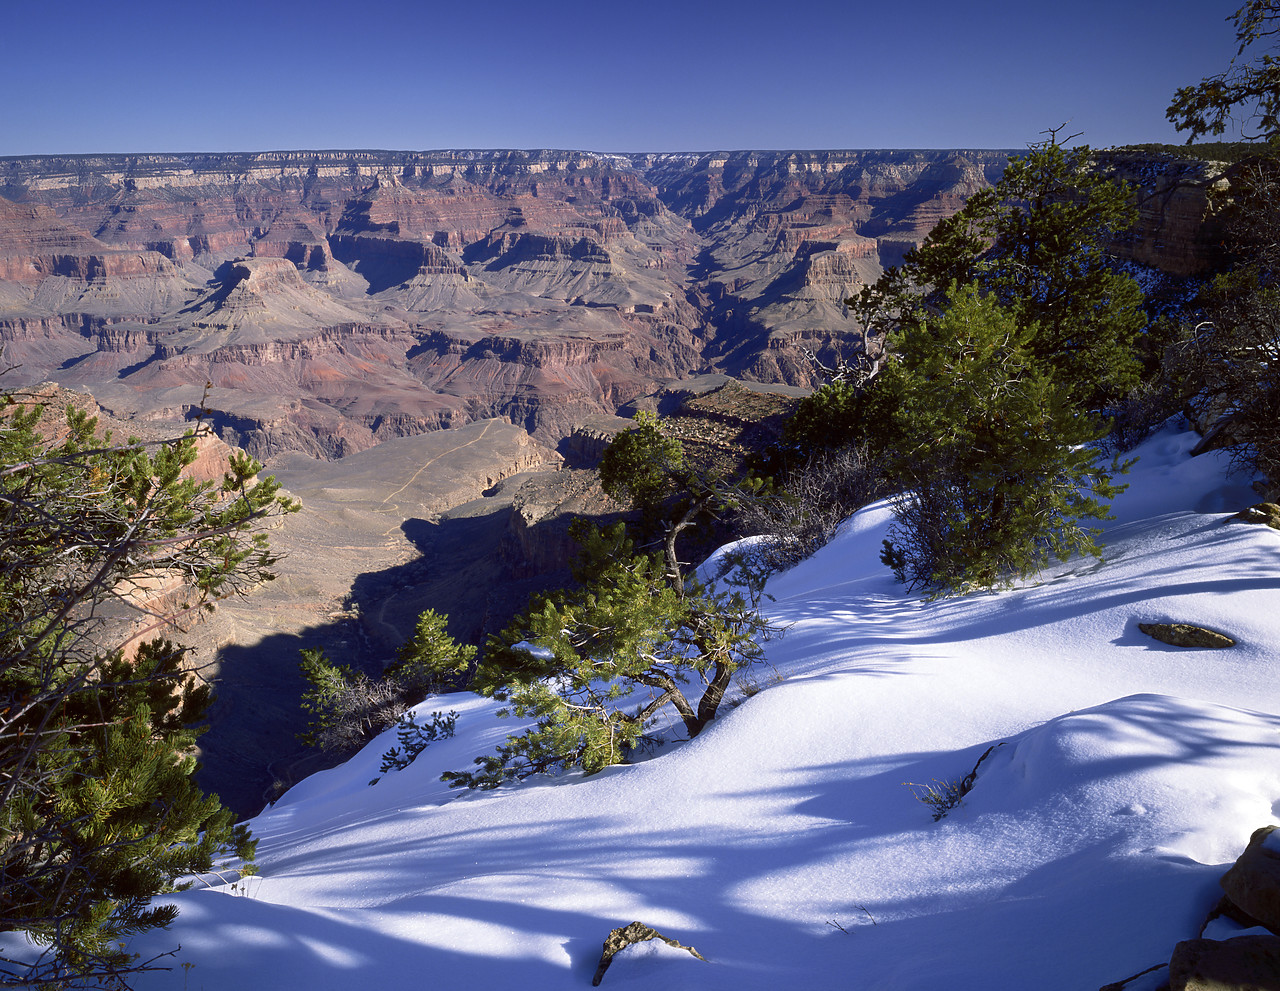 #891886-1 - Yavapai Point in Winter, Grand Canyon National Park, Arizona, USA